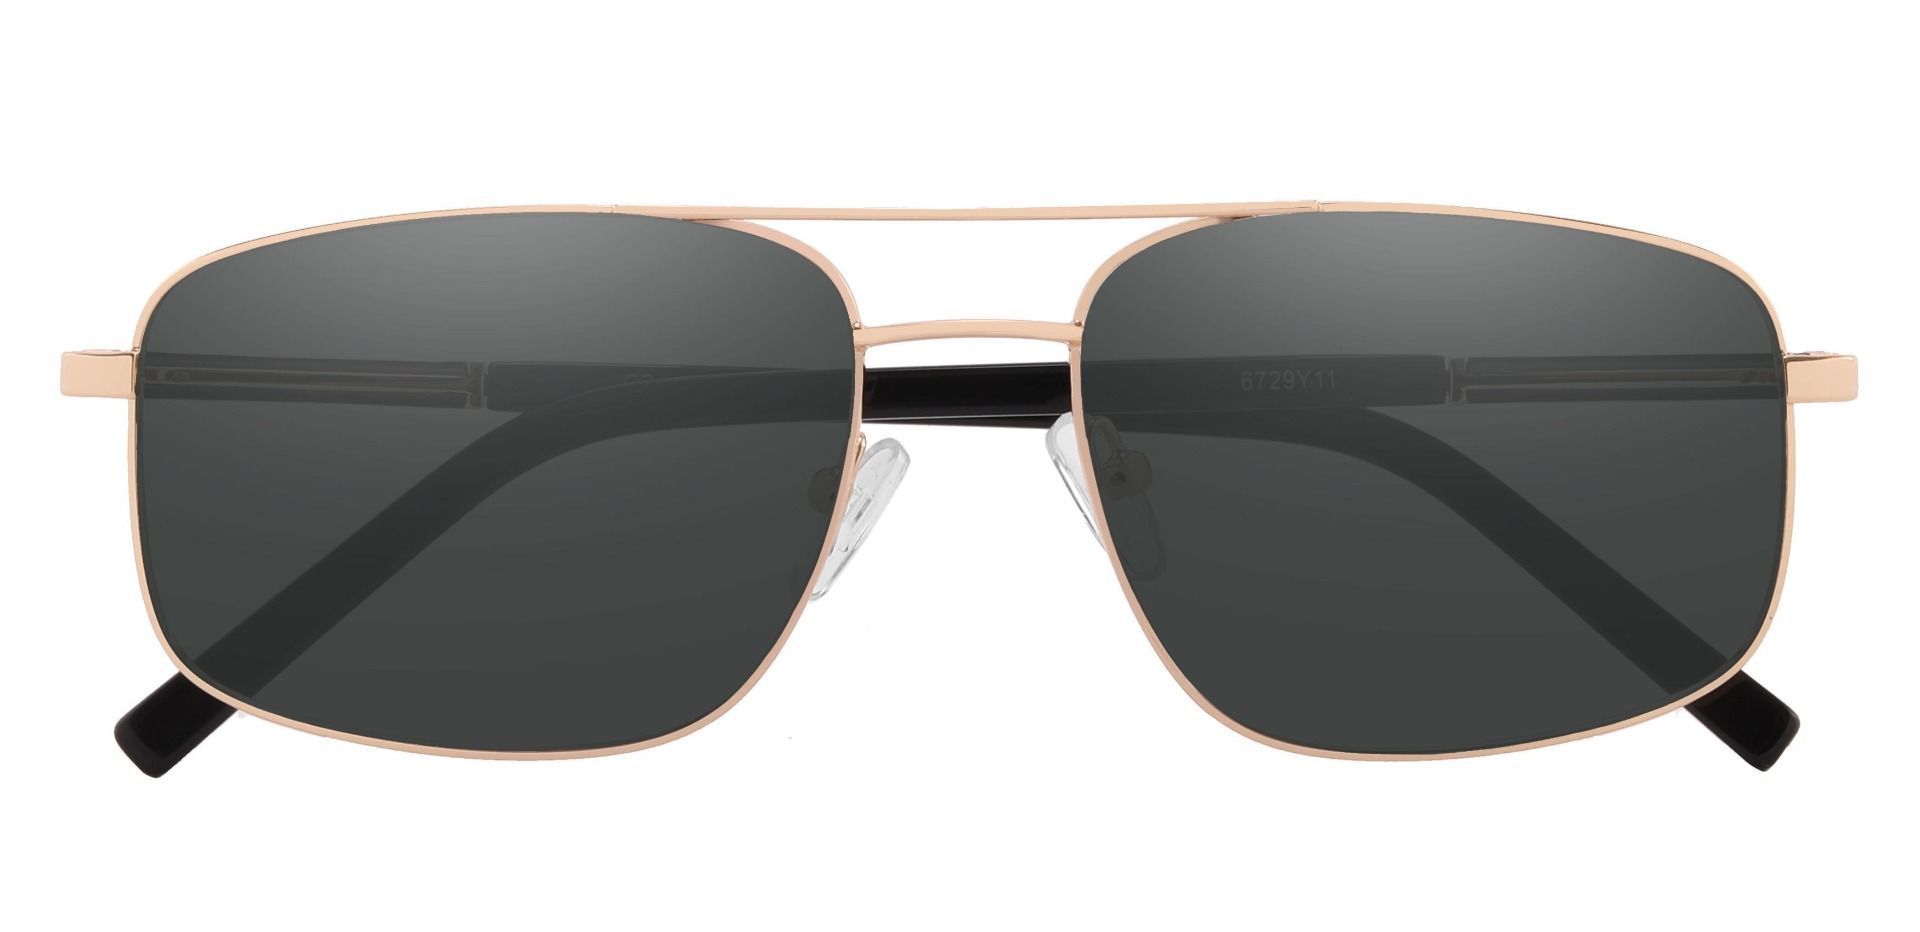 Davenport Aviator Lined Bifocal Sunglasses - Gold Frame With Gray Lenses